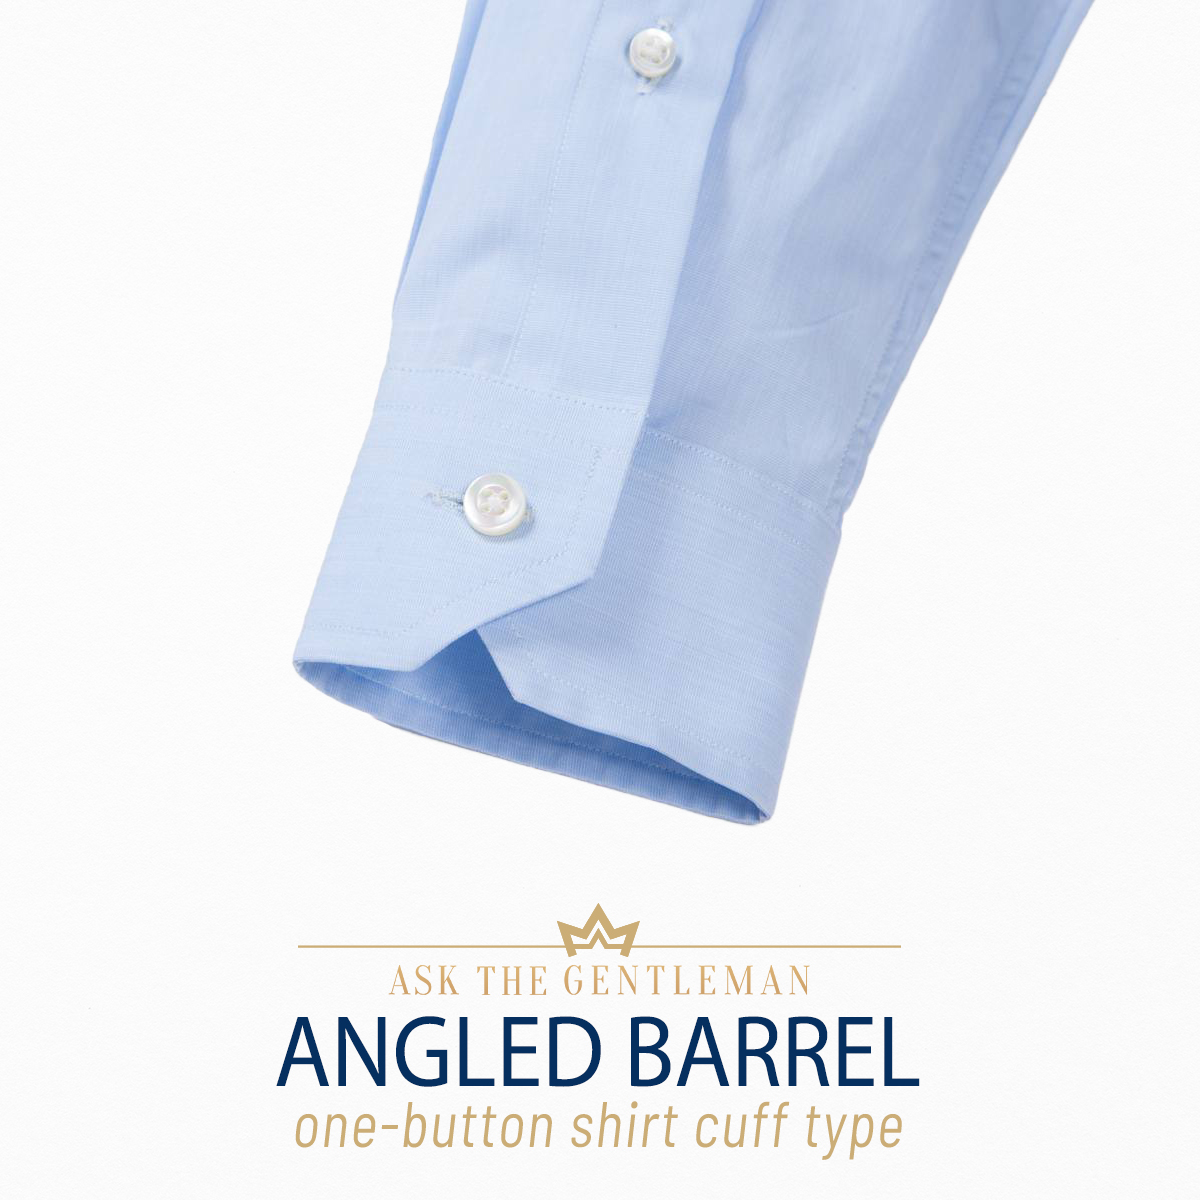 Angled barrel shirt cuff